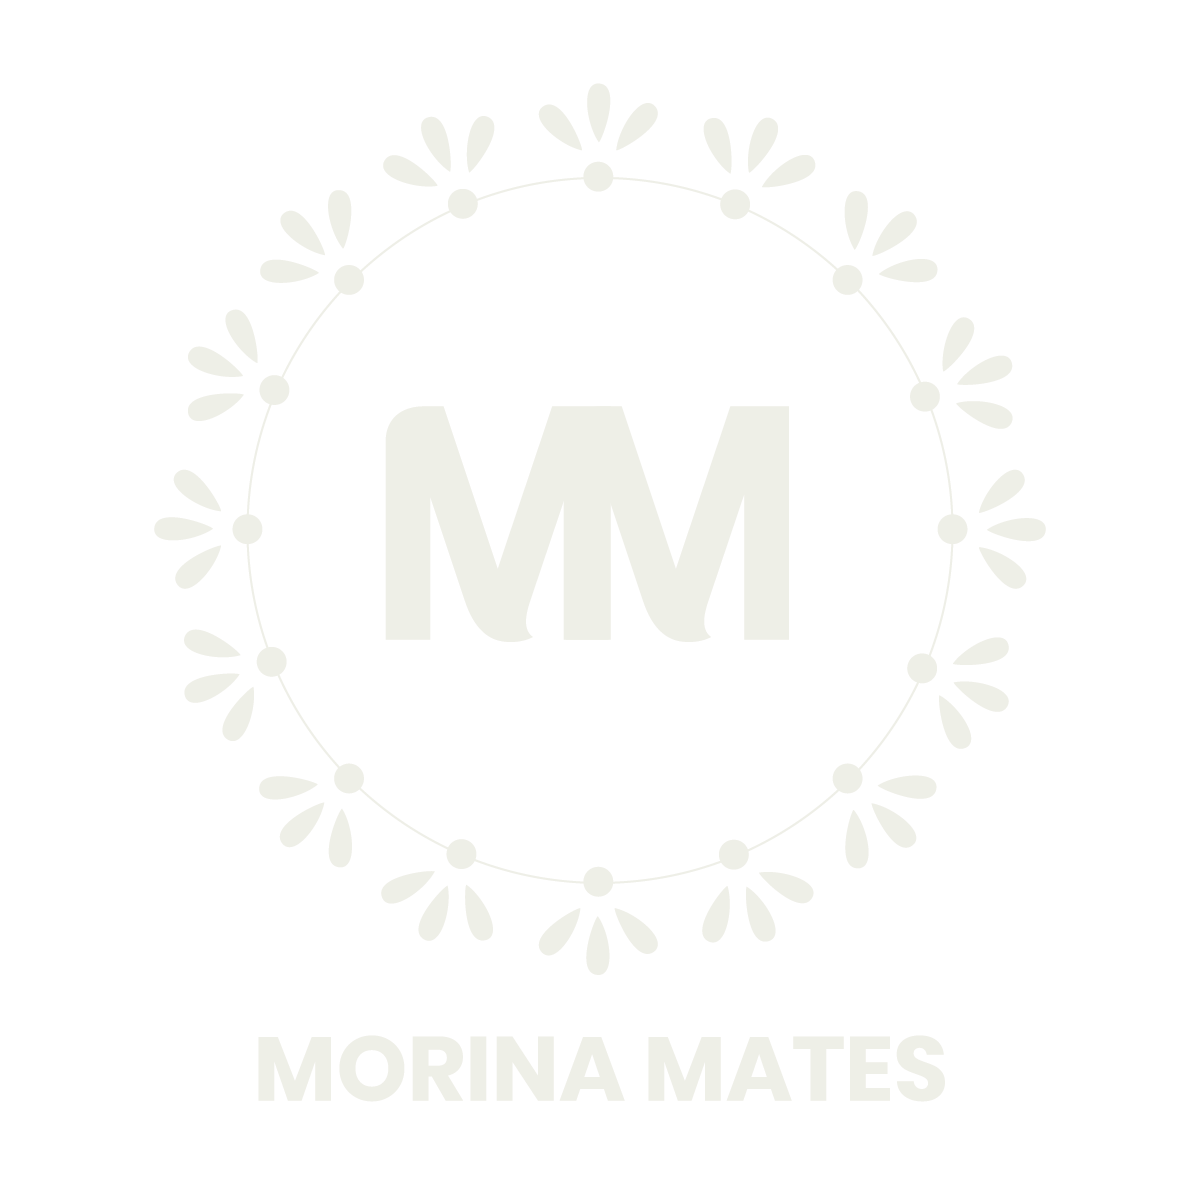 Morina Mates